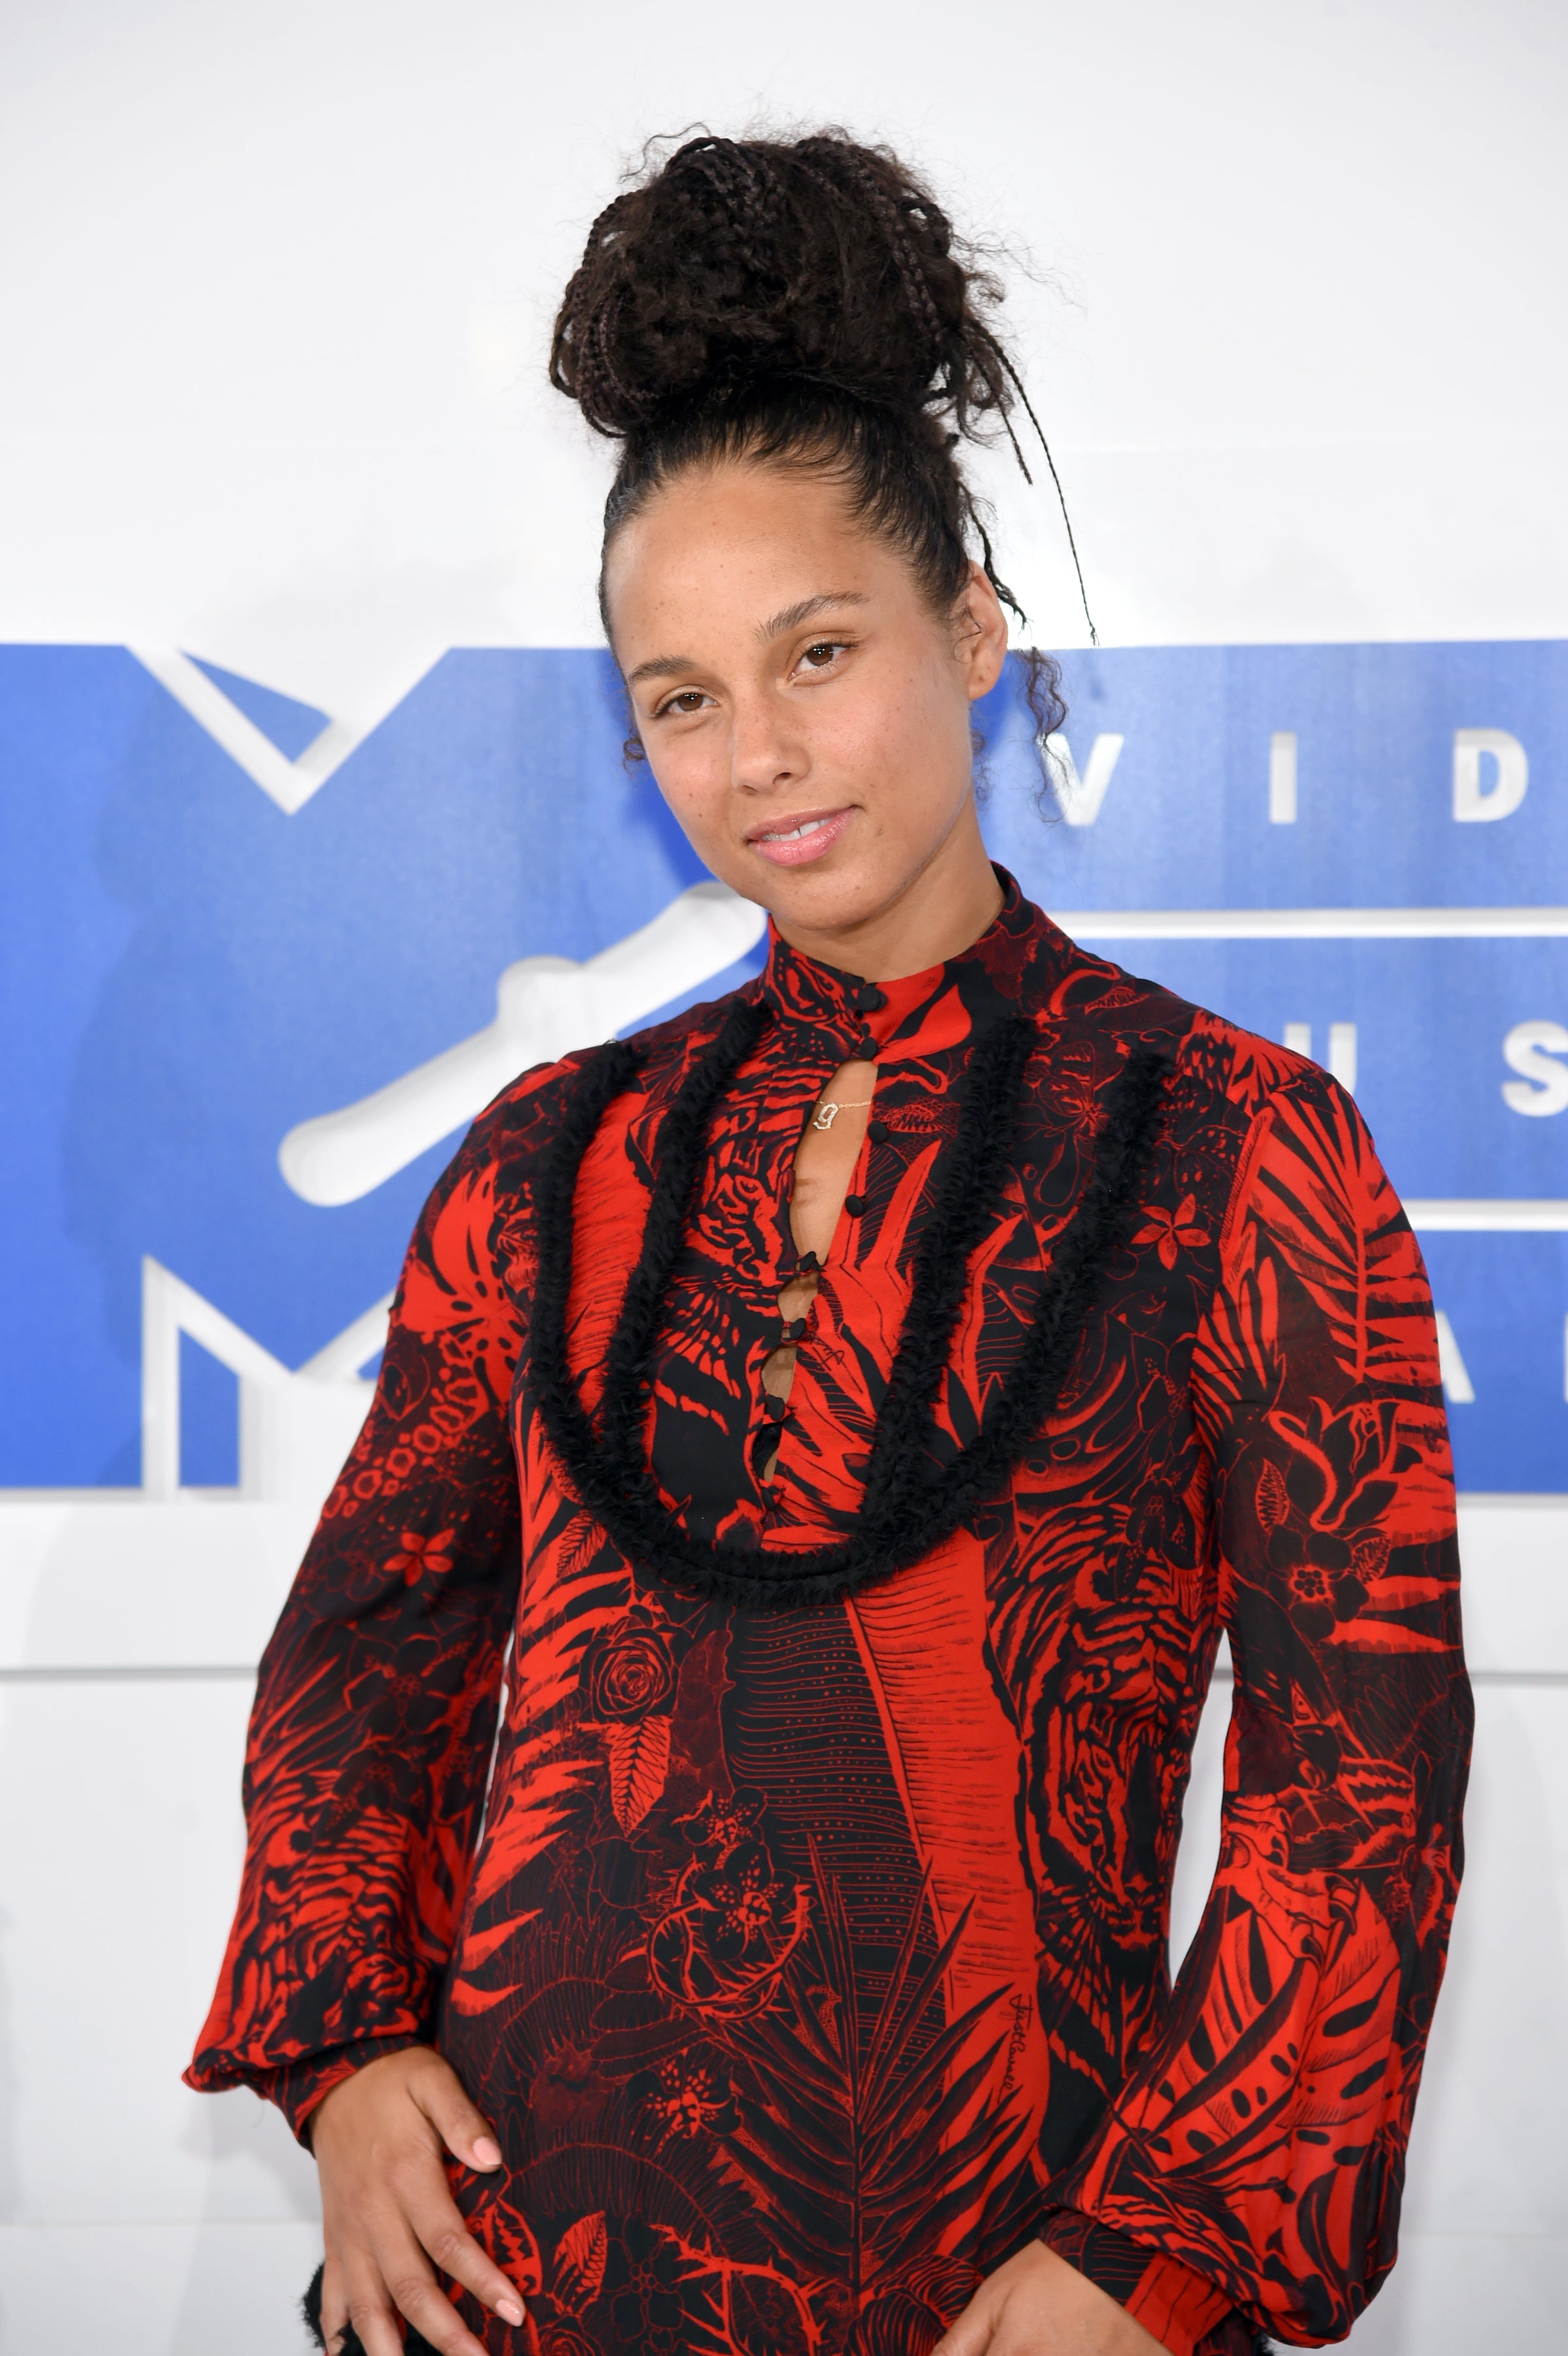 Alicia Keys Continues To Stun With #NoMakeup At The 2016 VMAs
